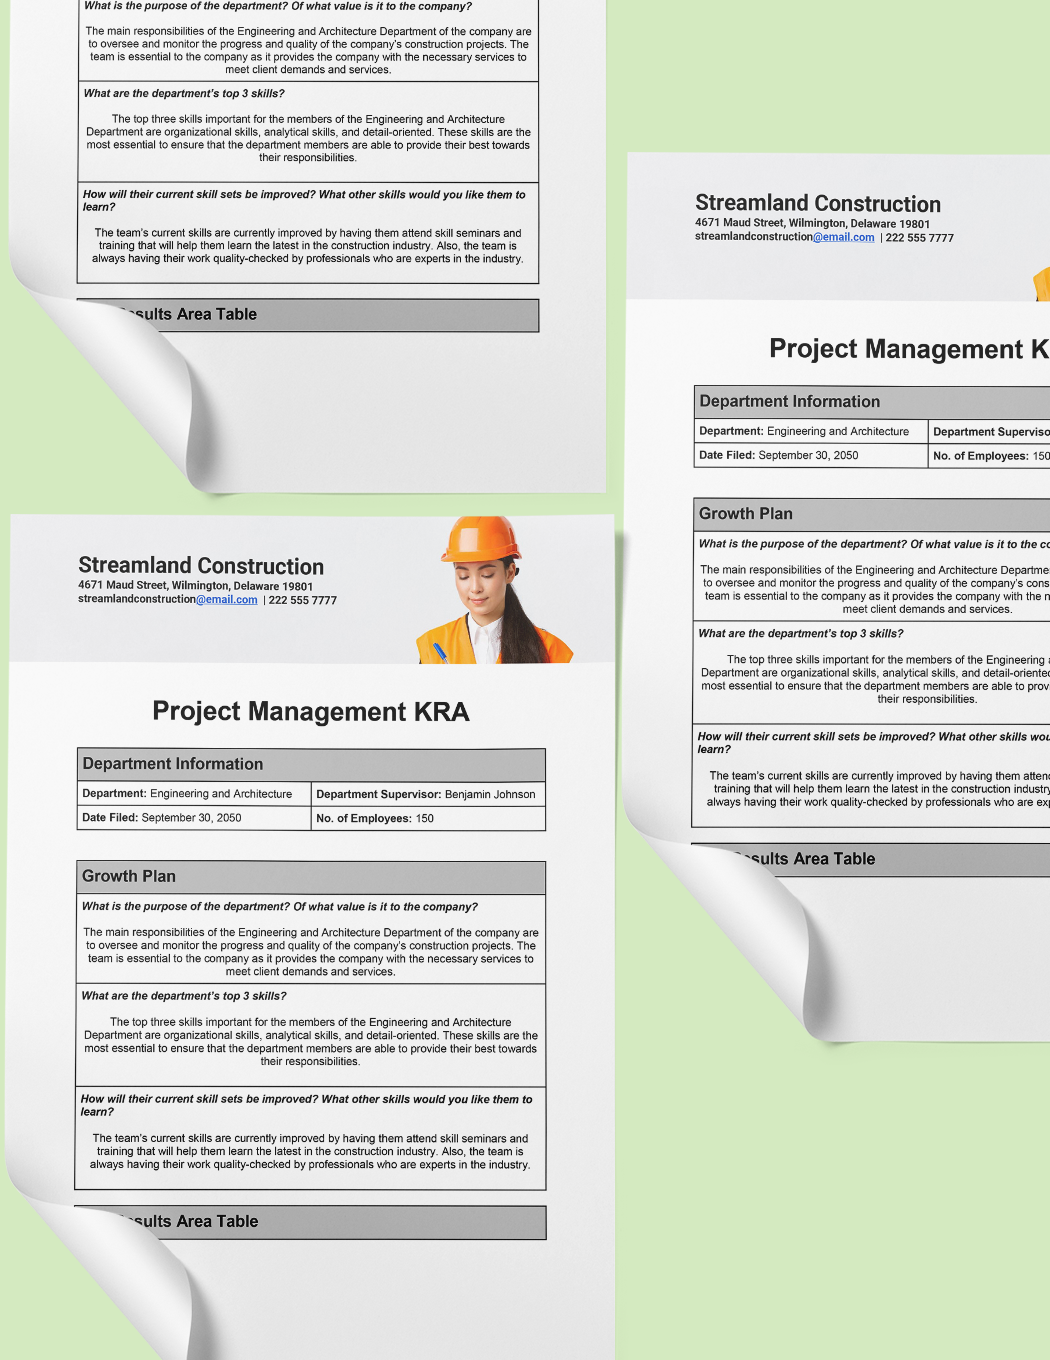 Project Management KRA Template